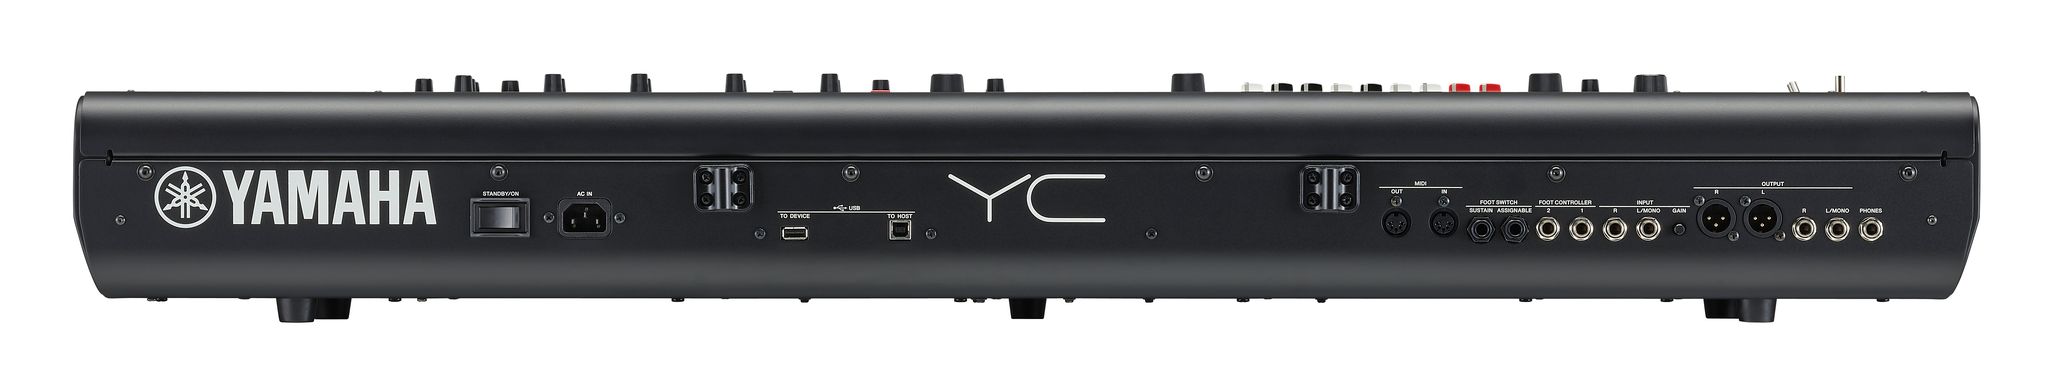 Yamaha Yc 73 - Stagepiano - Variation 2